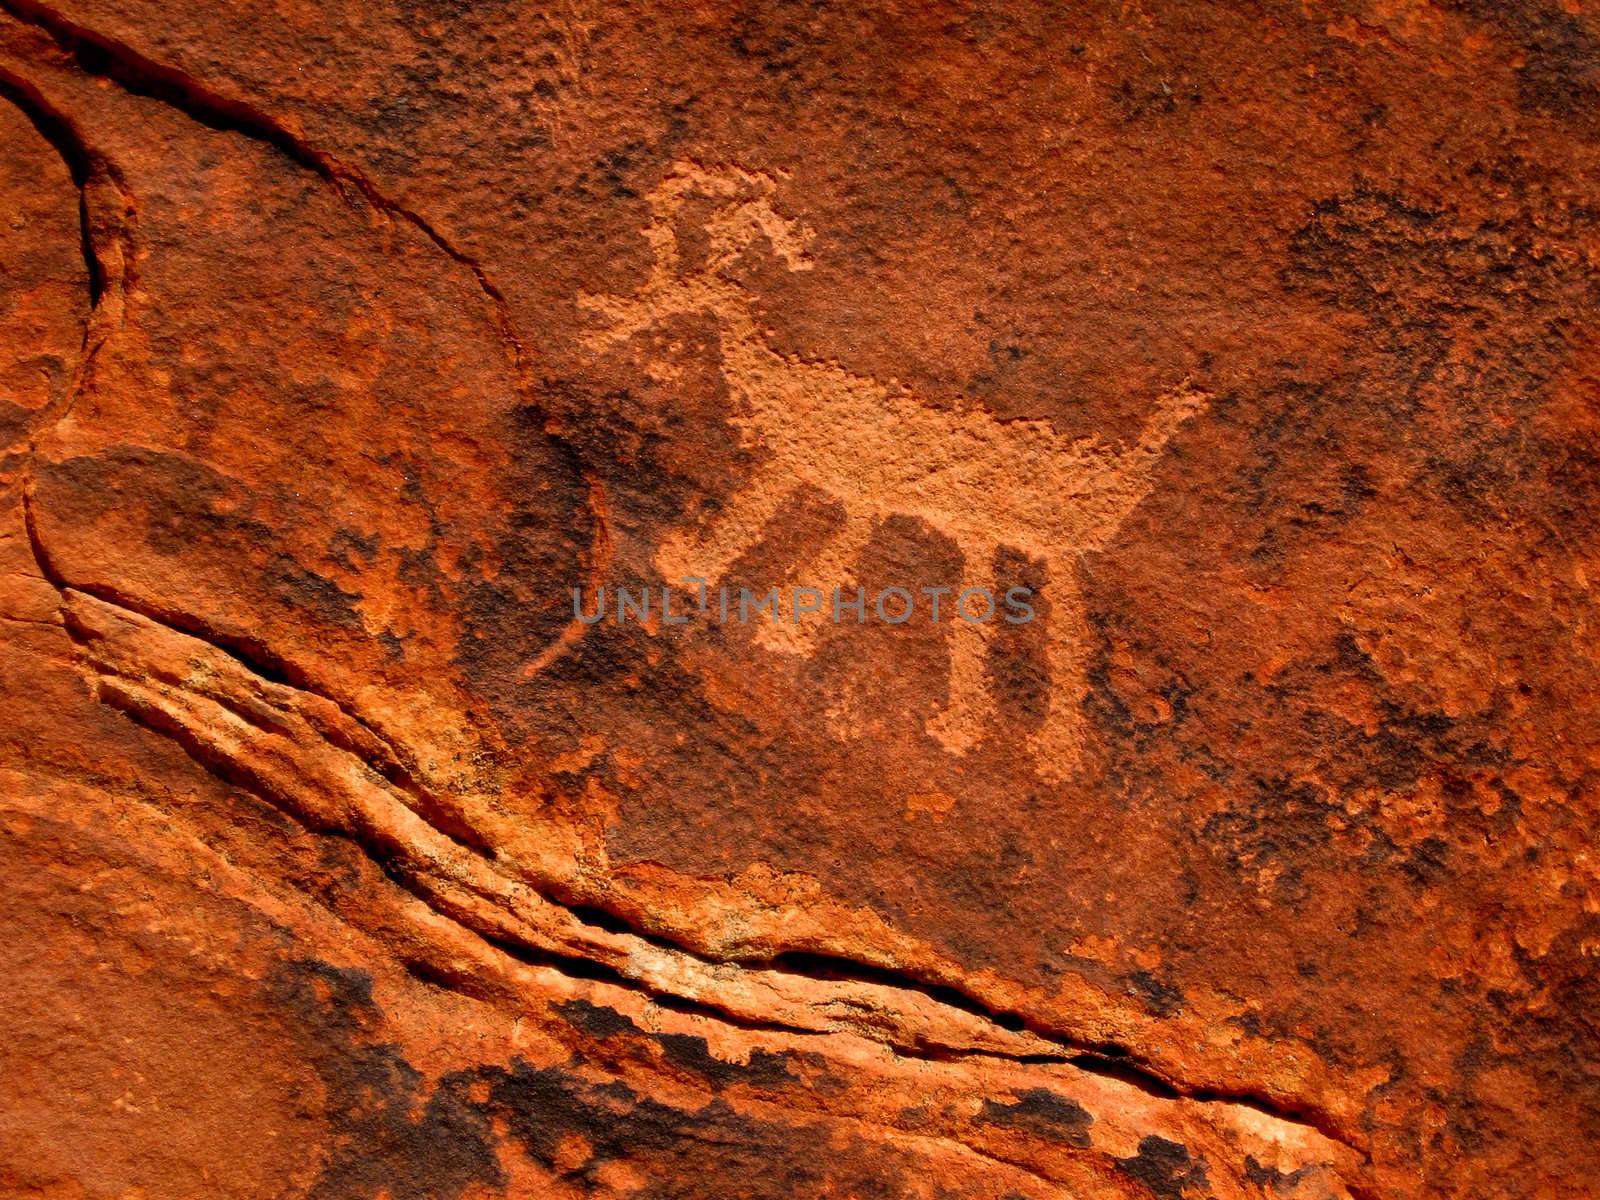 Historic Anasazi petroglyph depicting an animal in Step Canyon, Utah, USA.